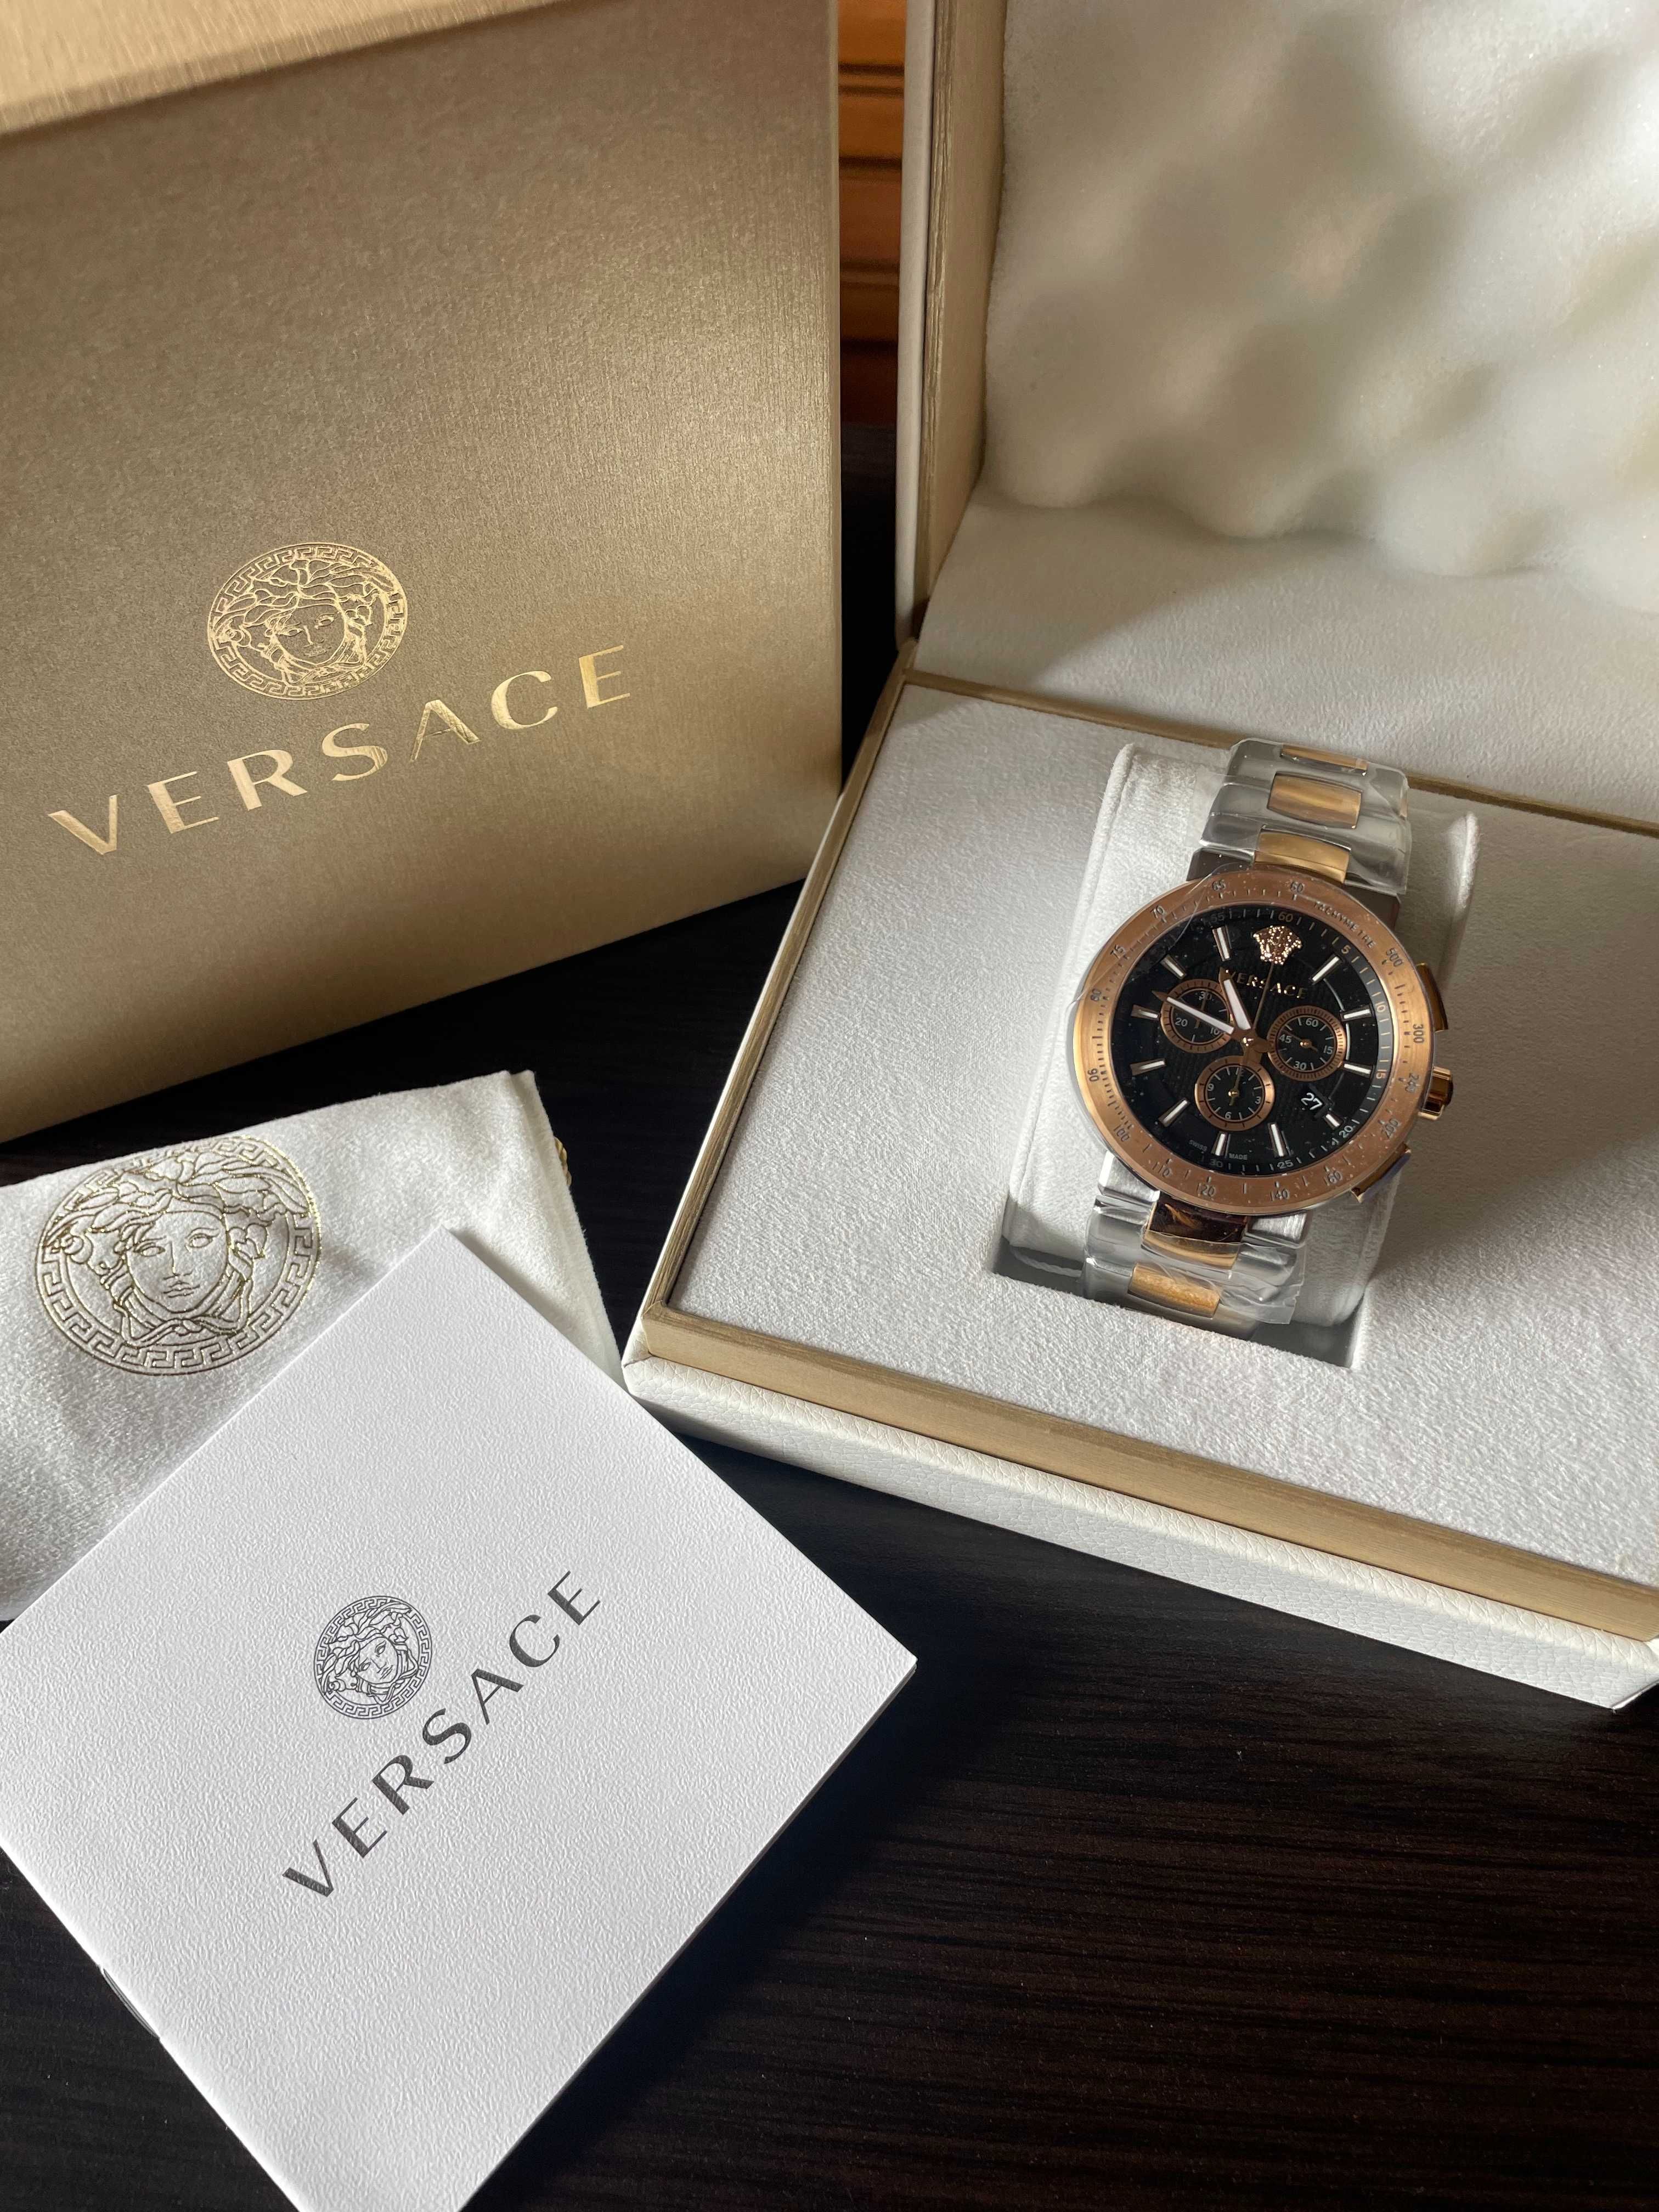 Zegarek premium szwajcarski
Versace-MYSTIQUE CHRONO